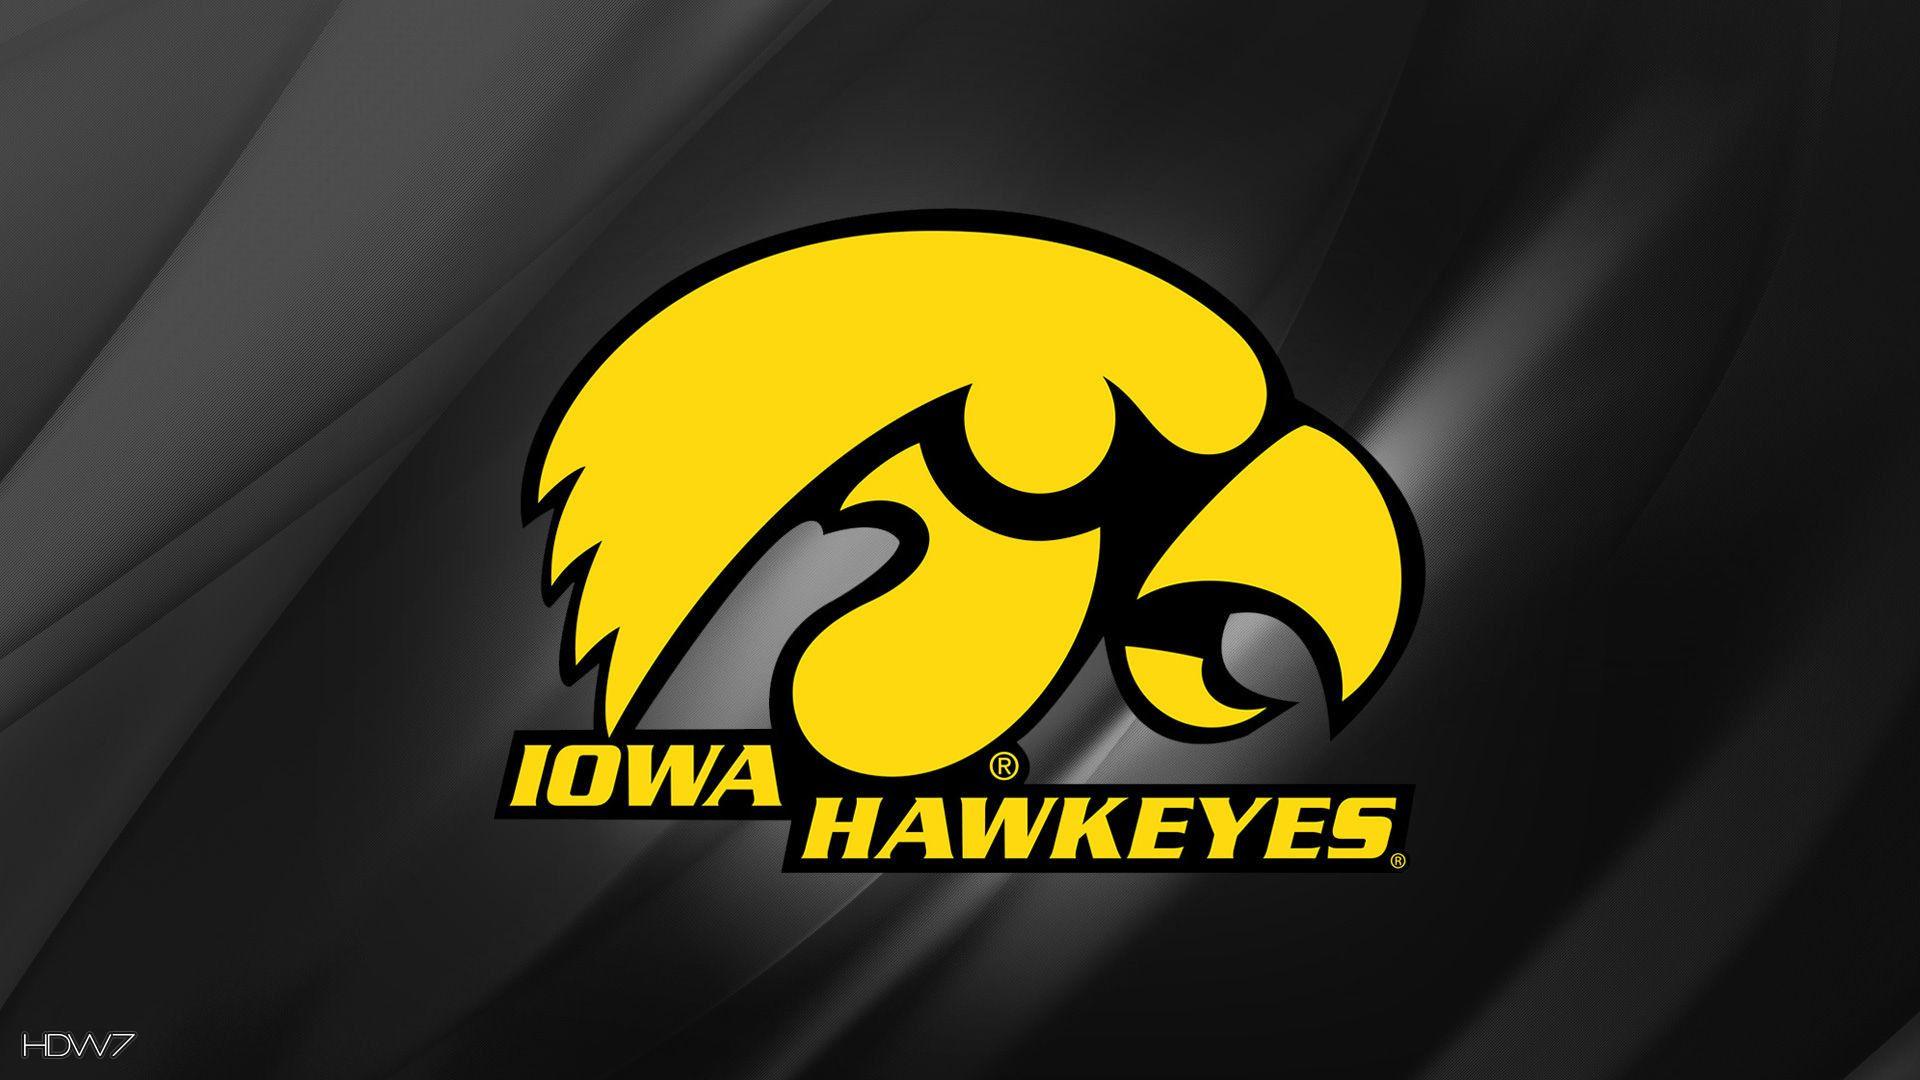 Iowa Hawkeyes Wallpapers Top Free Iowa Hawkeyes Backgrounds